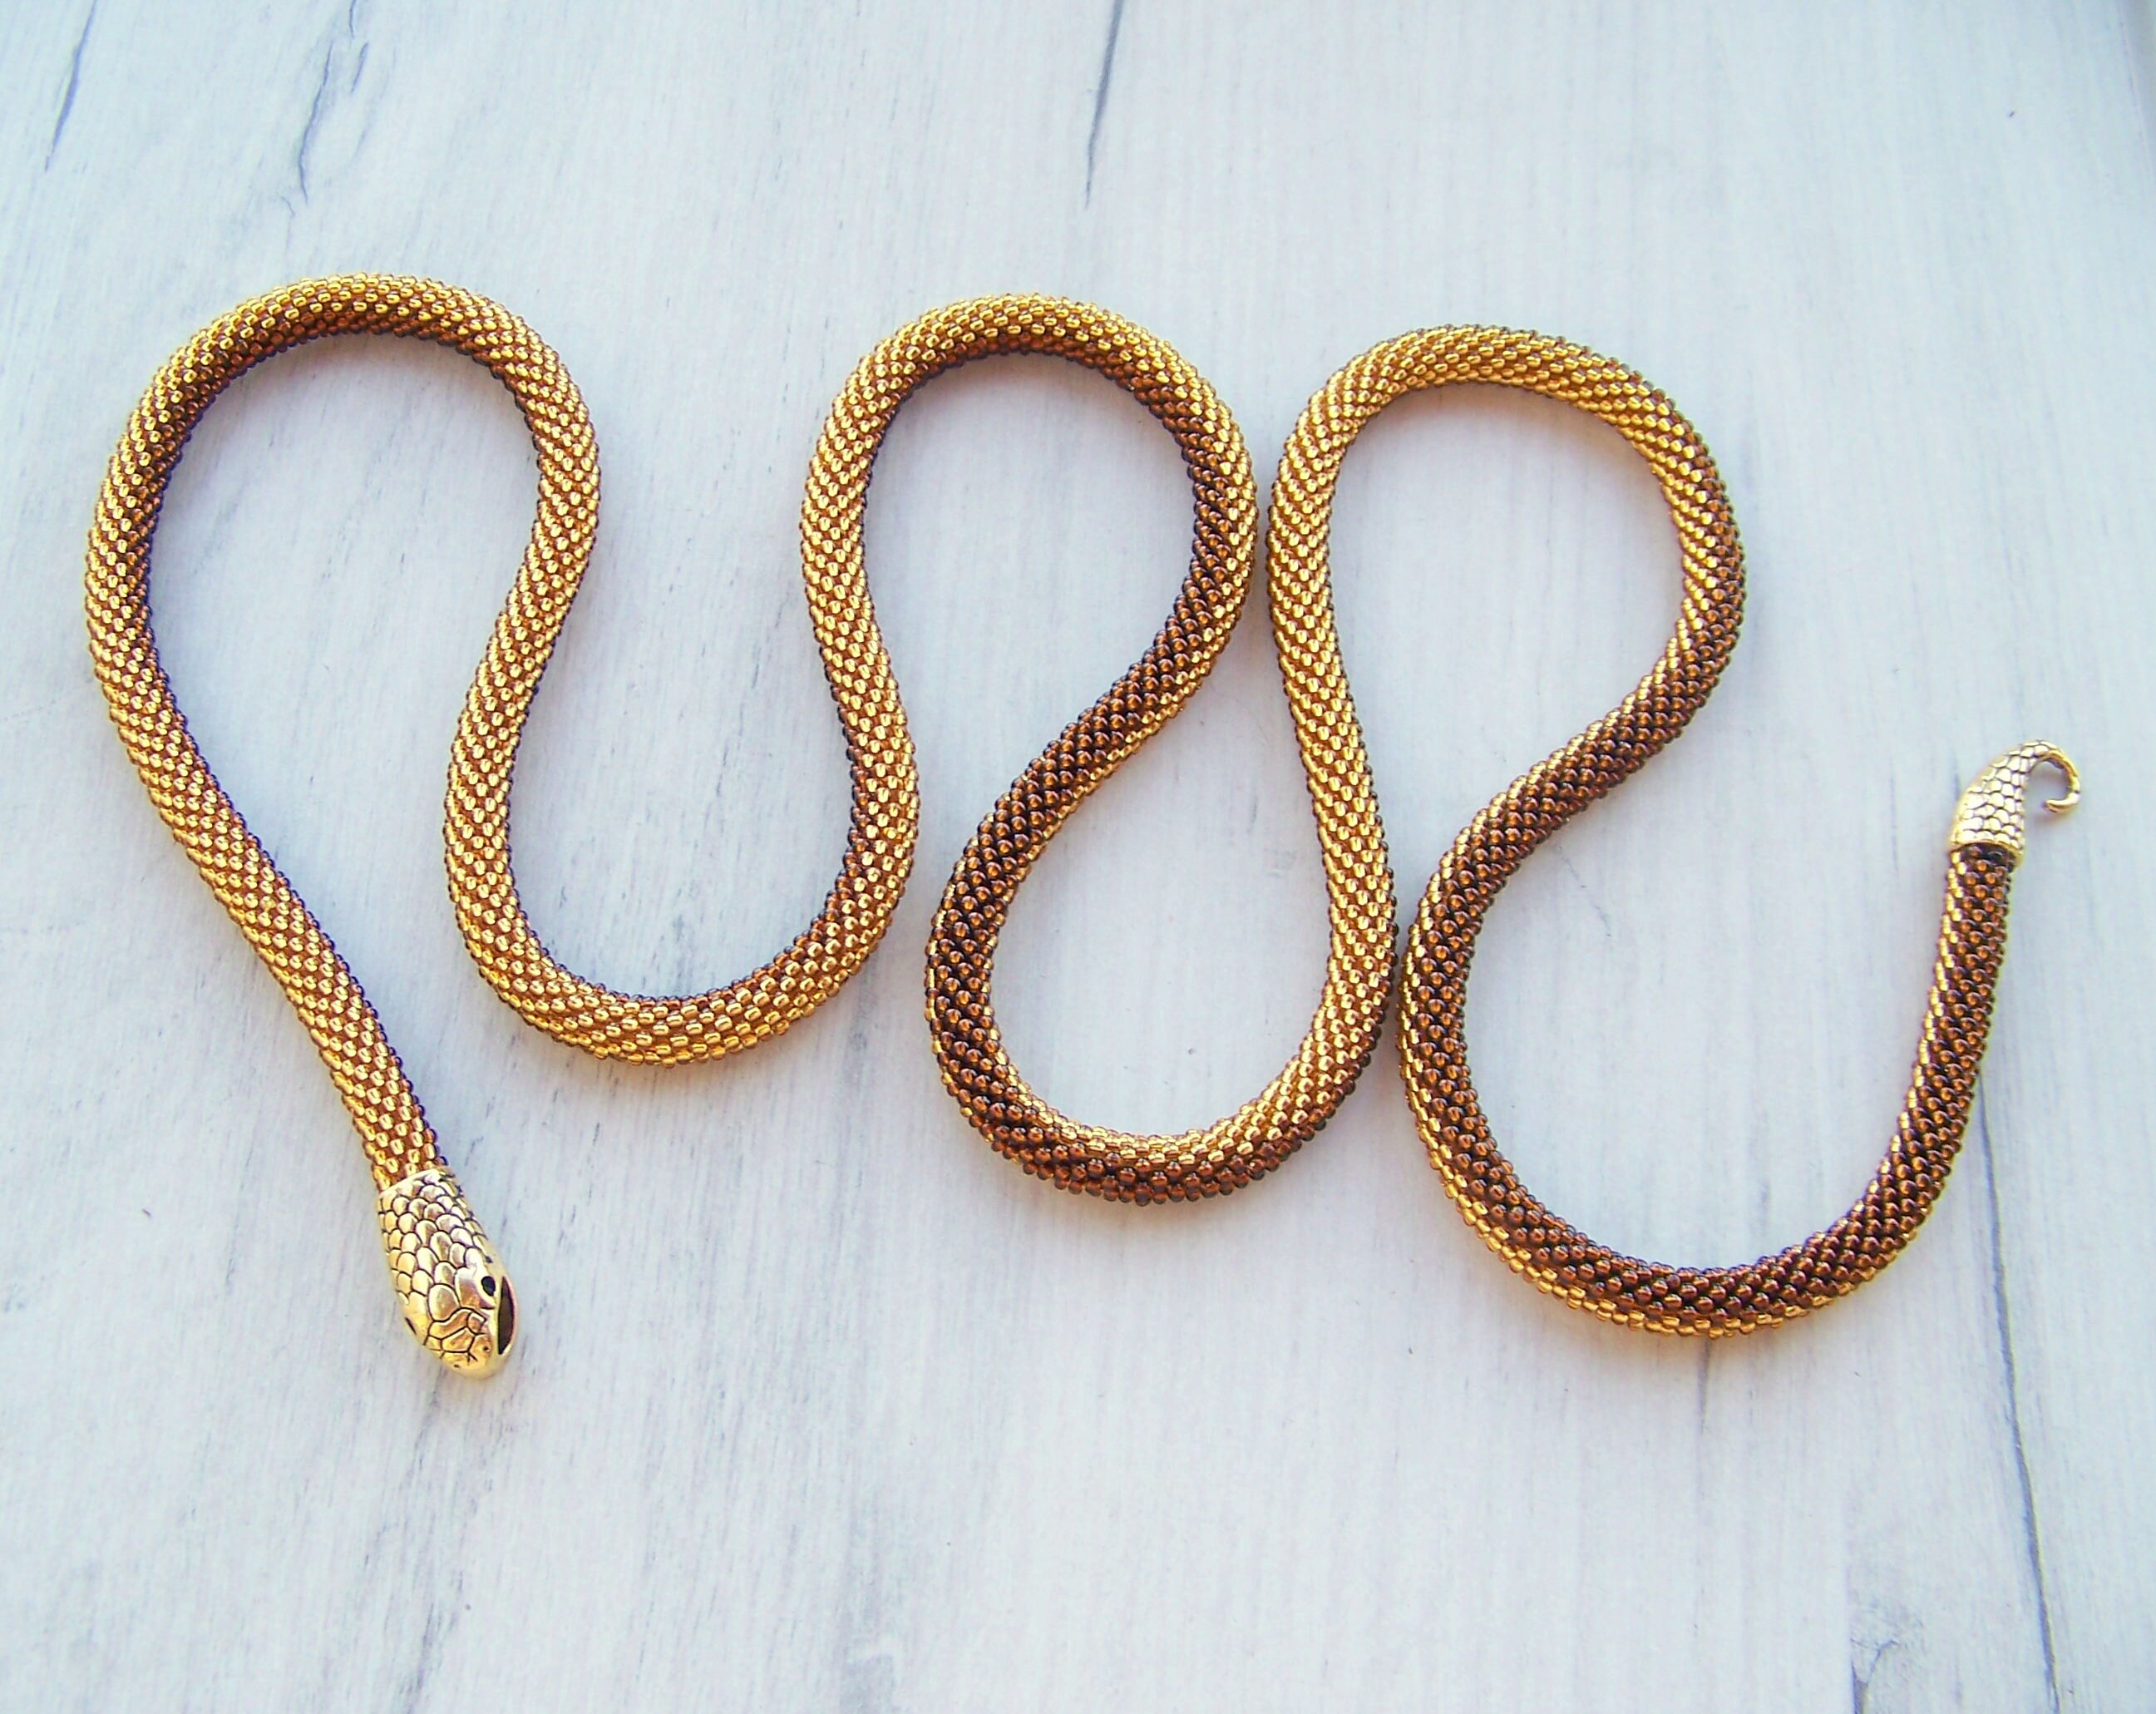 Bead Crochet Long Serpent Necklace Kit Ombre Snake Necklace | Etsy